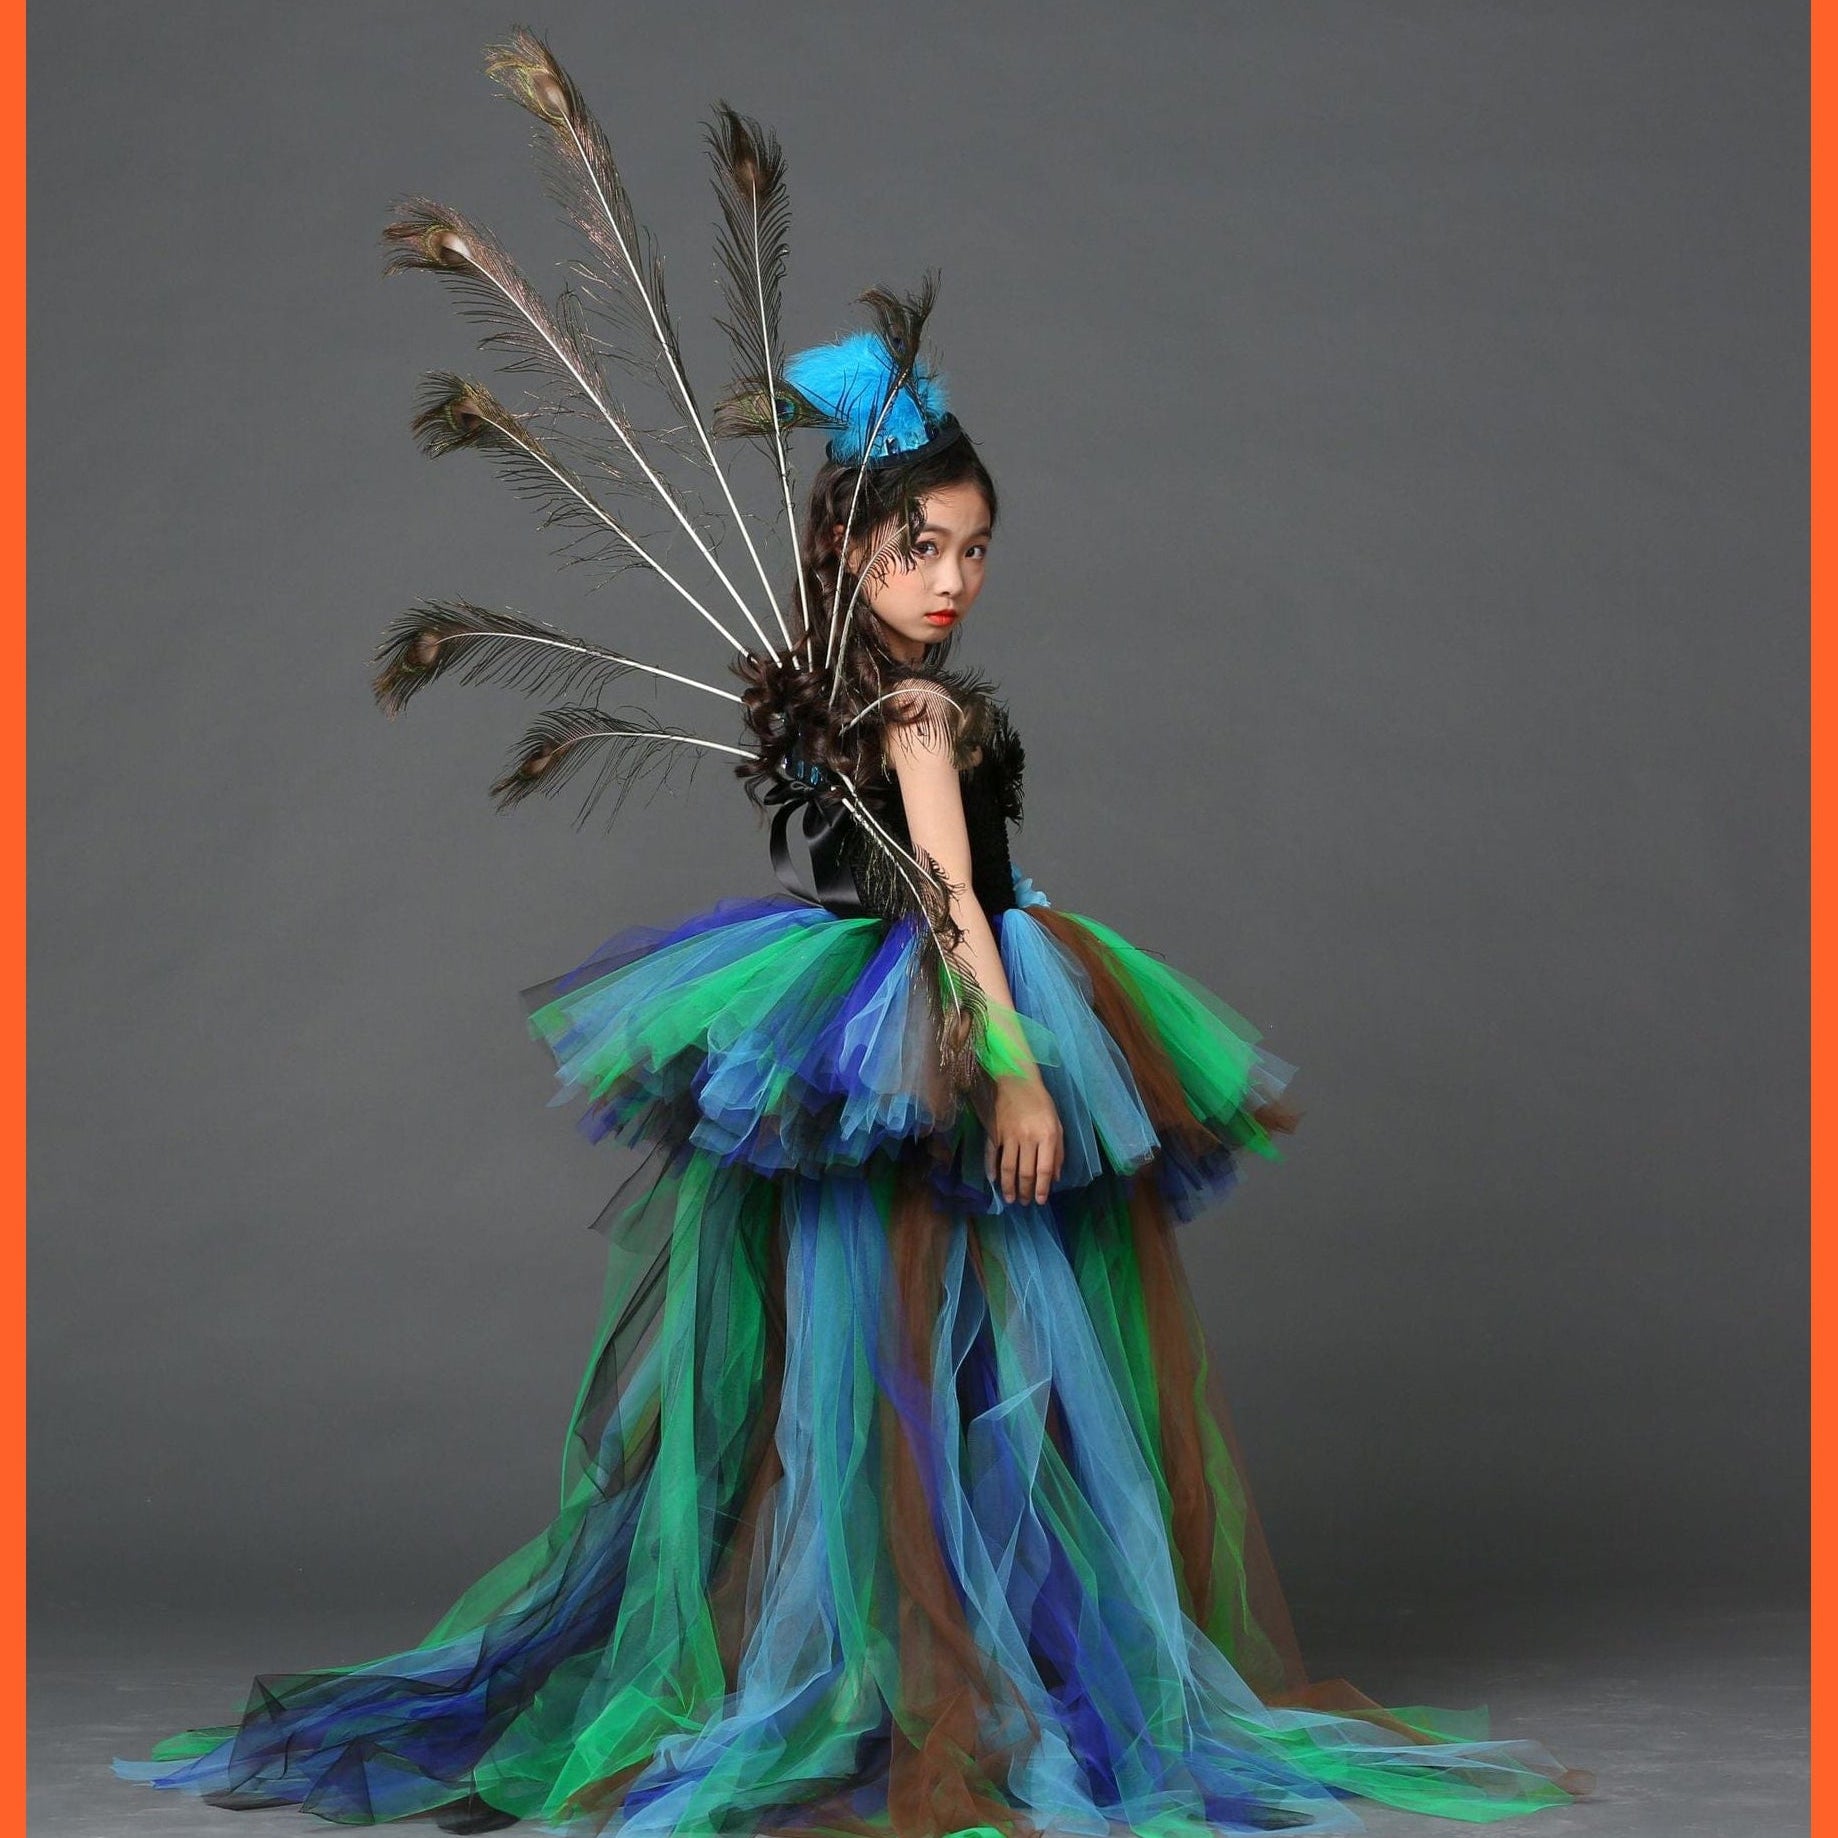 whatagift.com.au Kids Dresses Halloween Girl Peacock Flower Party Tutu Dresses | Train Tulle Peacock Princess